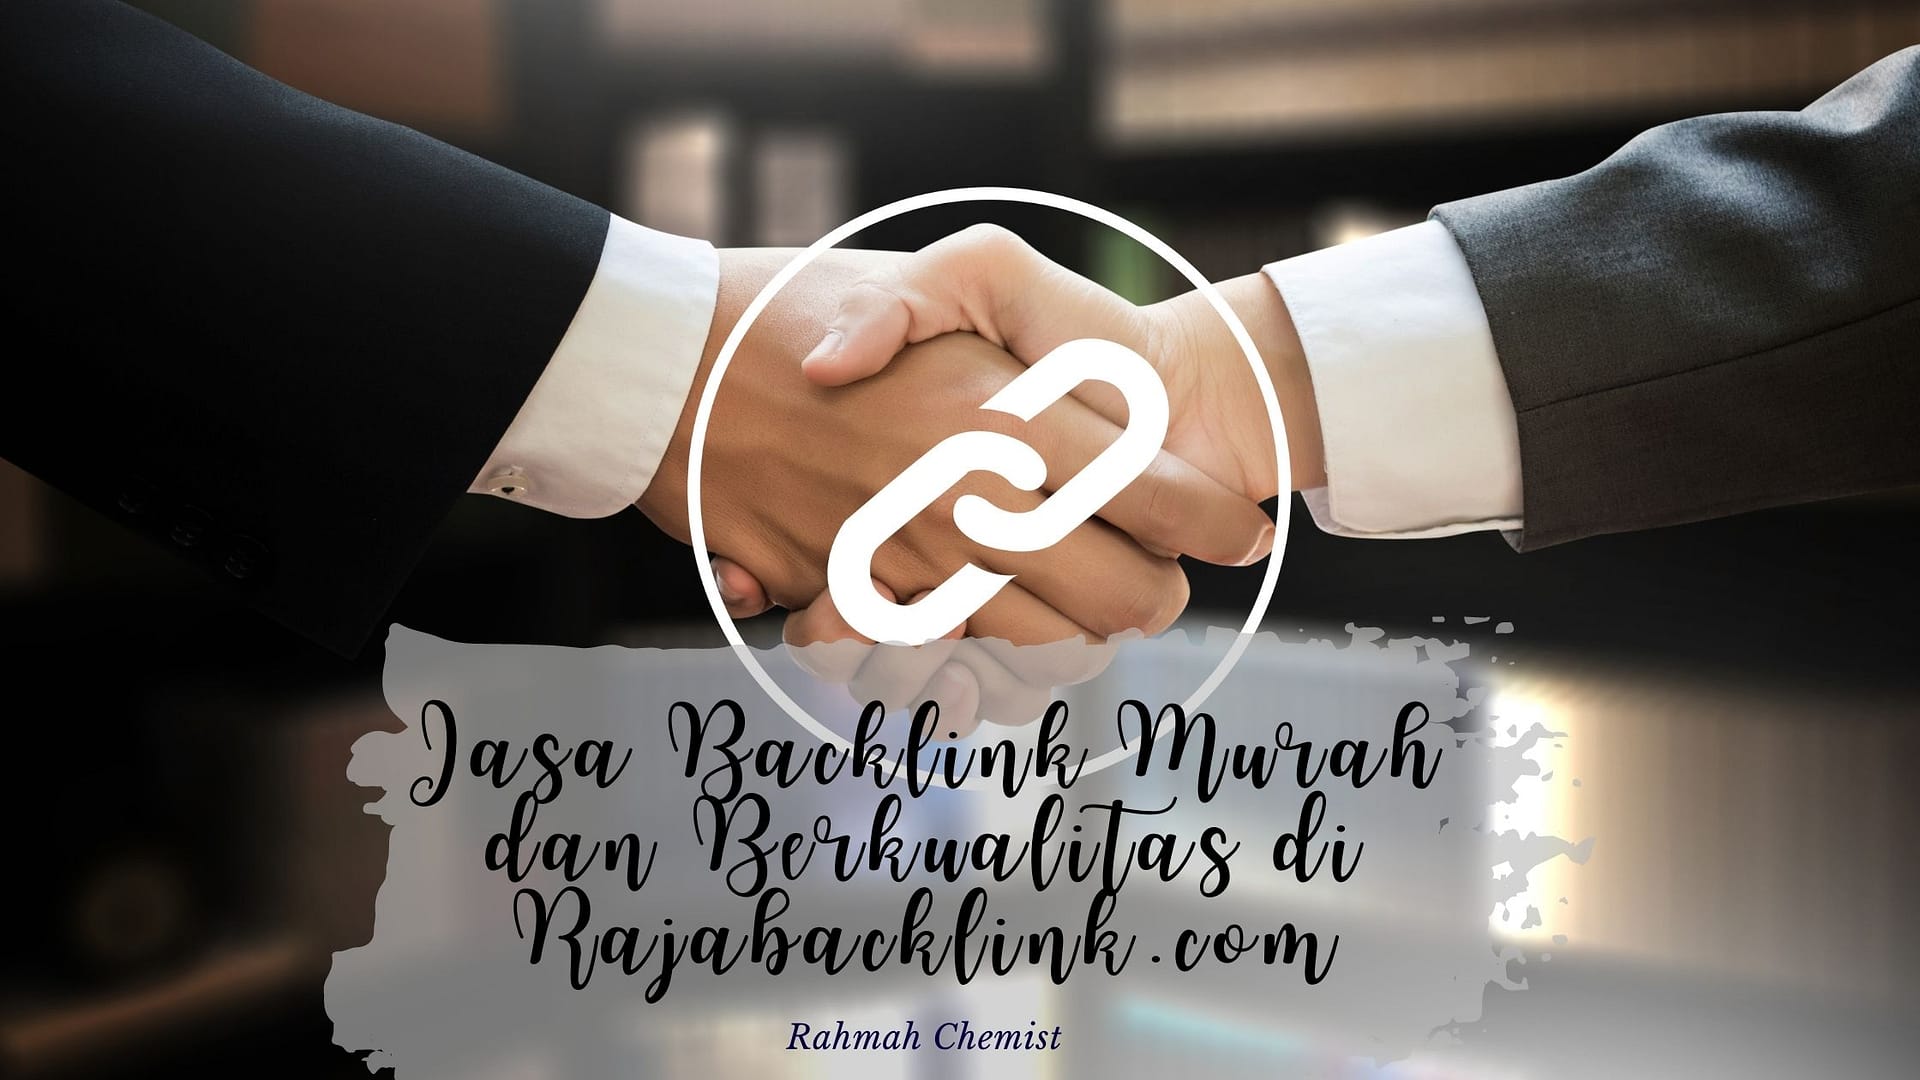 jasa backlink murah rajabacklink.com